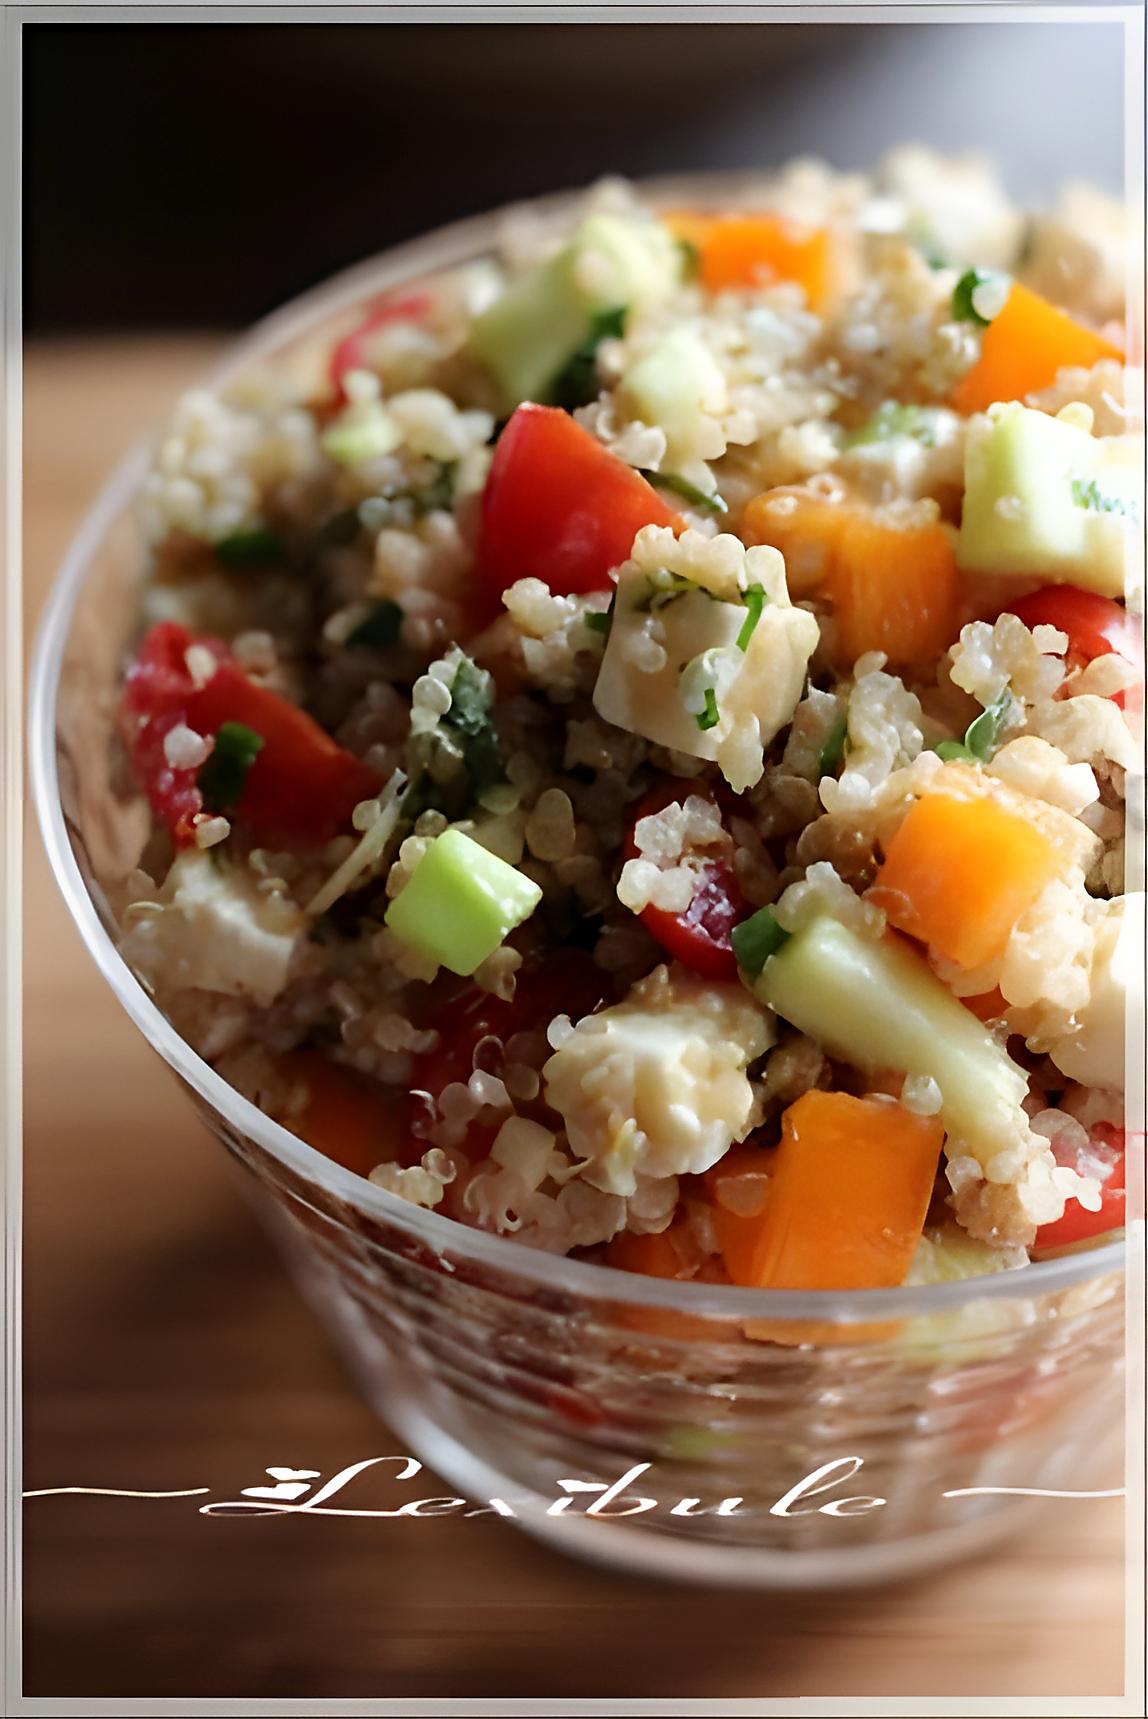 recette ~Salade de quinoa avec amandes, feta et légumes~